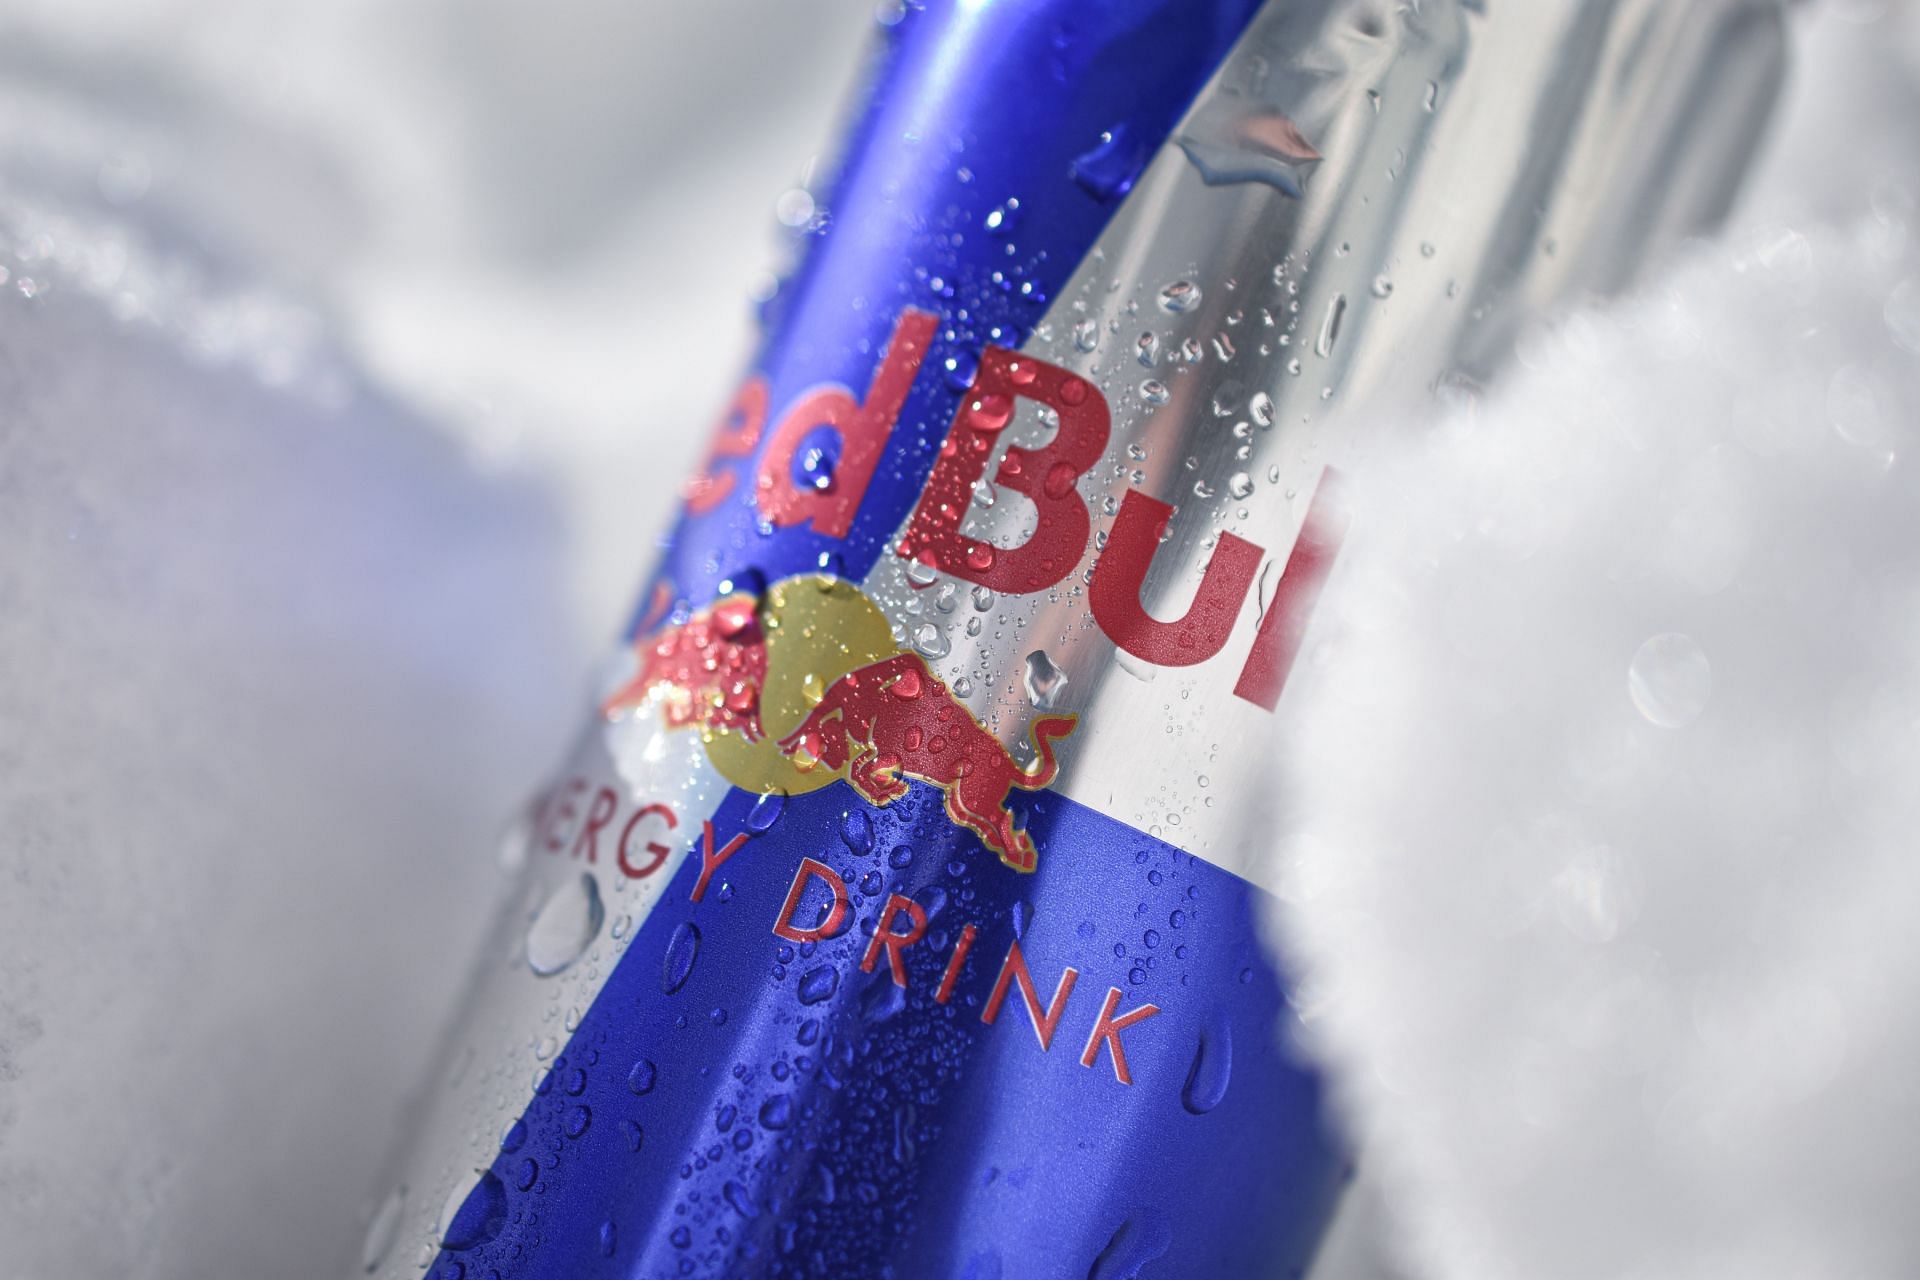 Red Bull has high sugar content. (Image via Unsplash/ Jesper Brouwers)